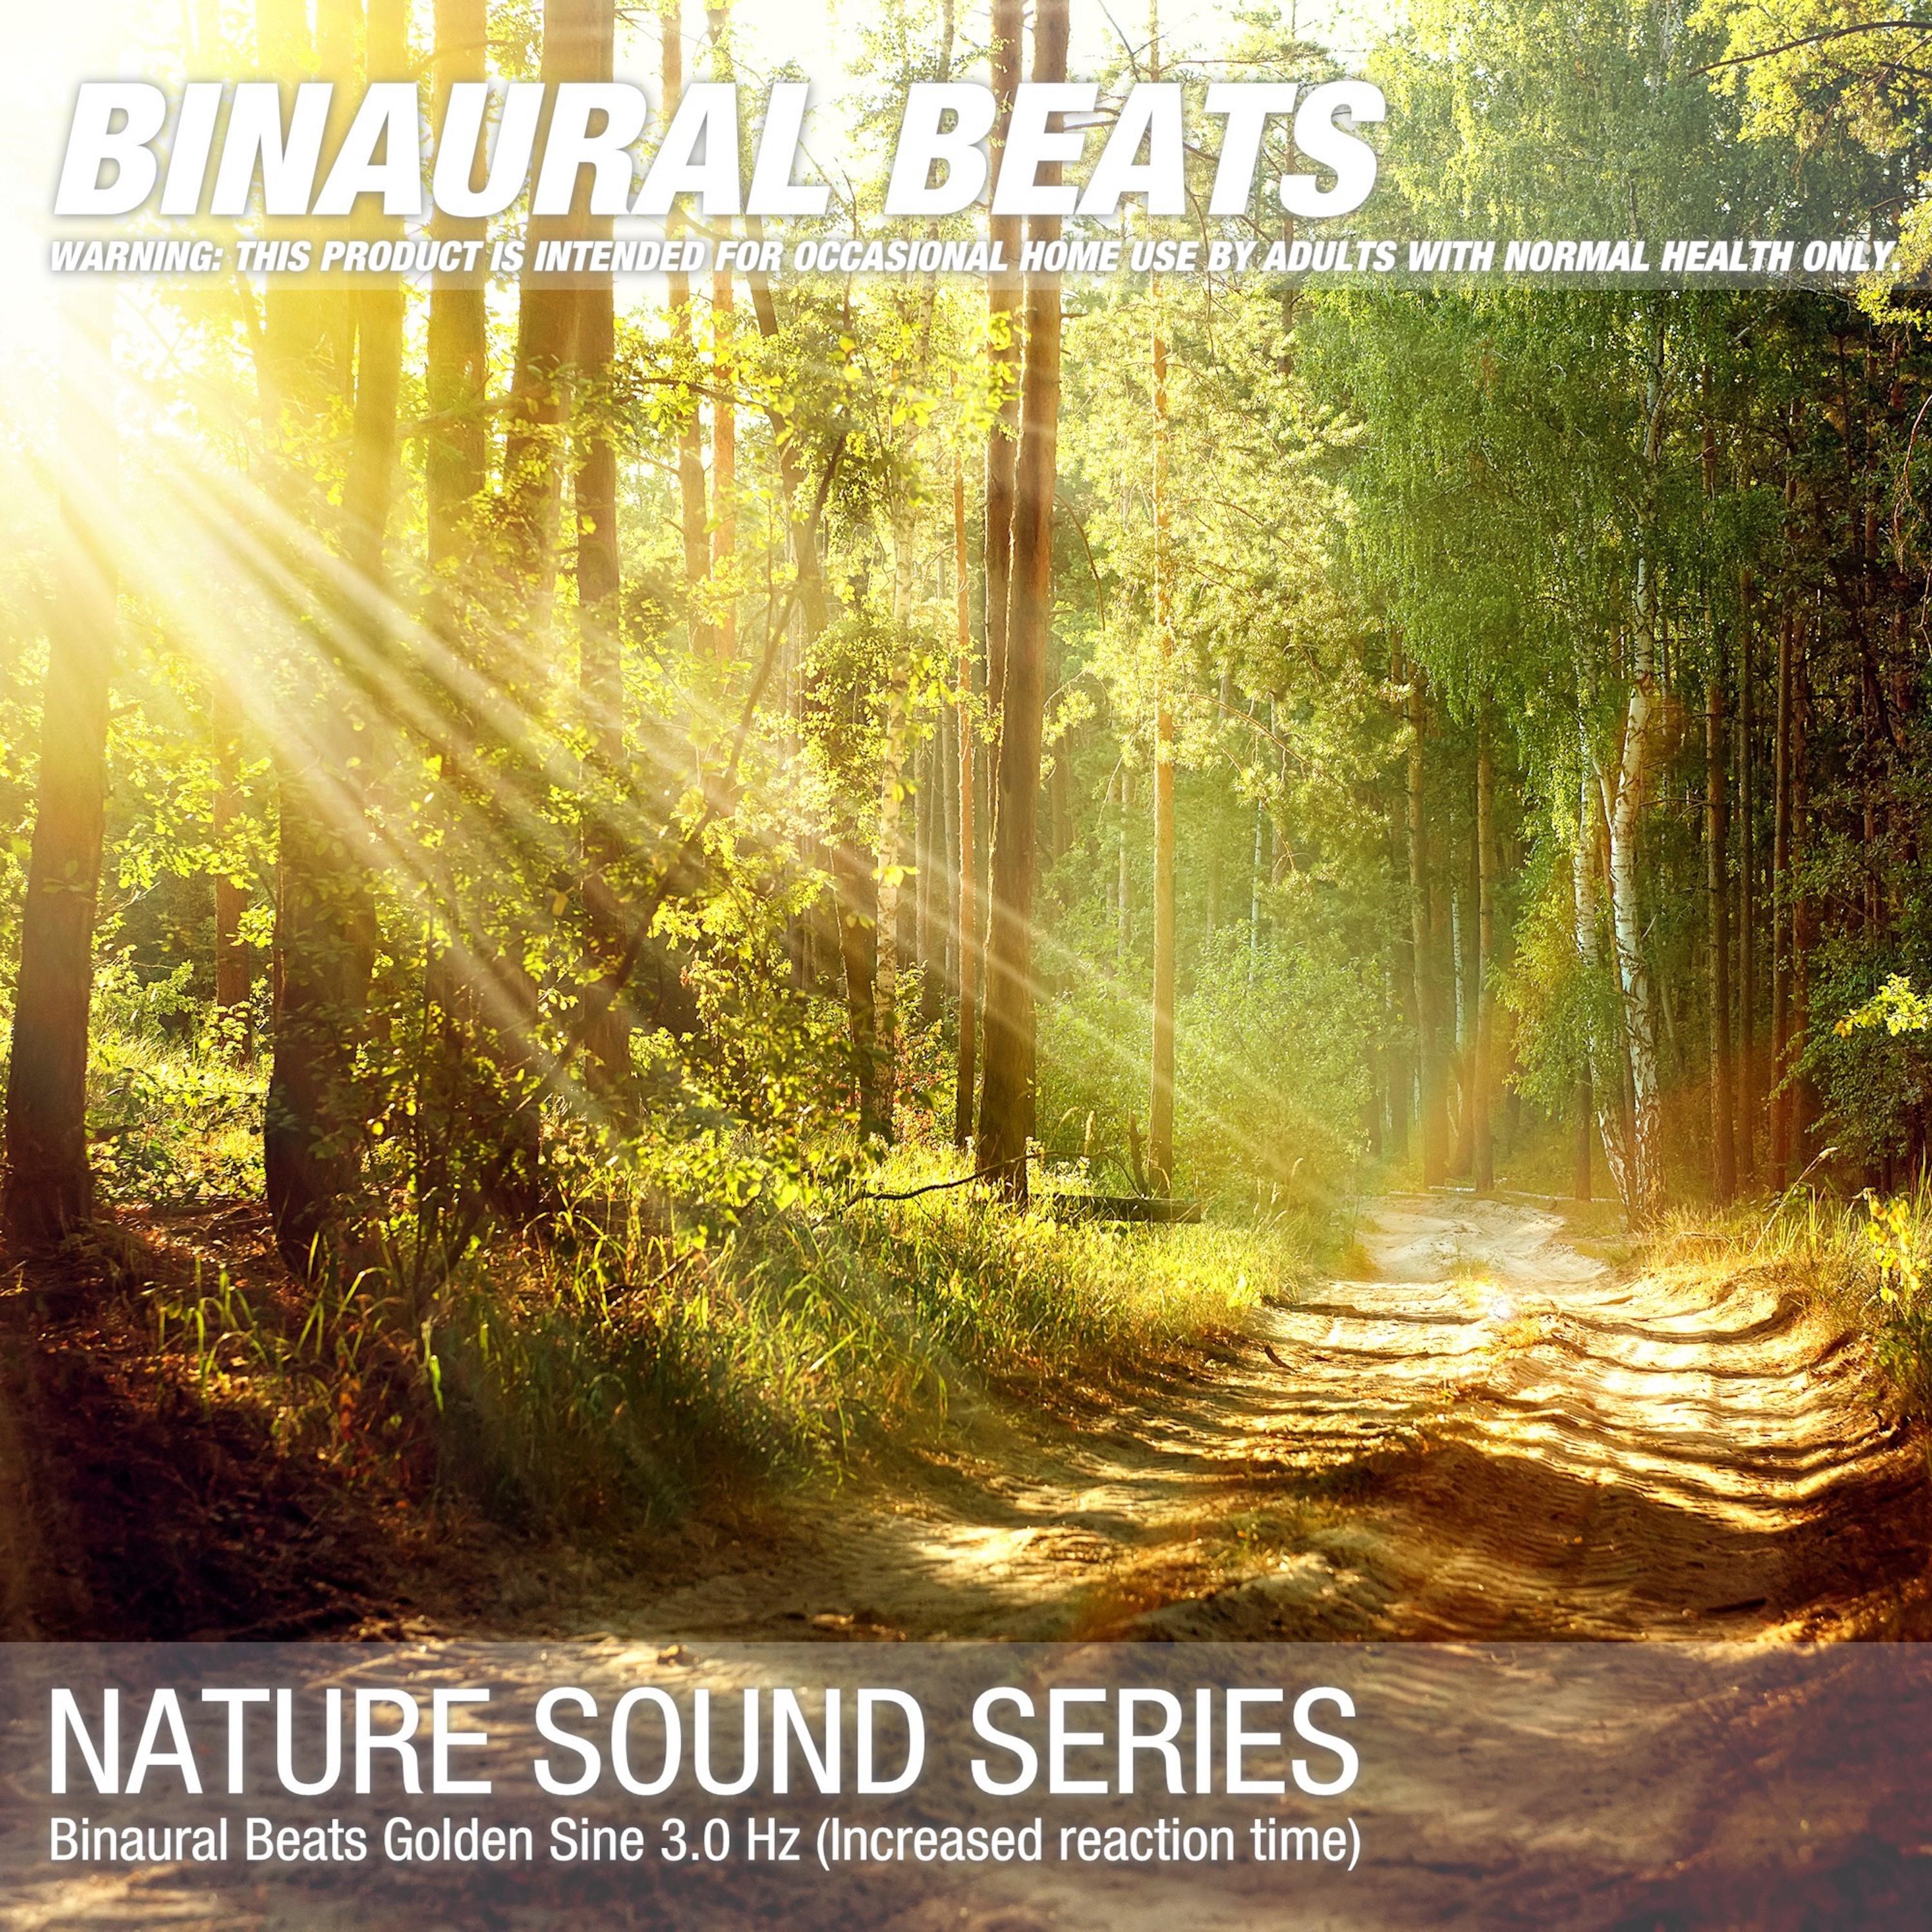 Binaural Beats Golden Sine 3.0 Hz (Increased reaction time) 04